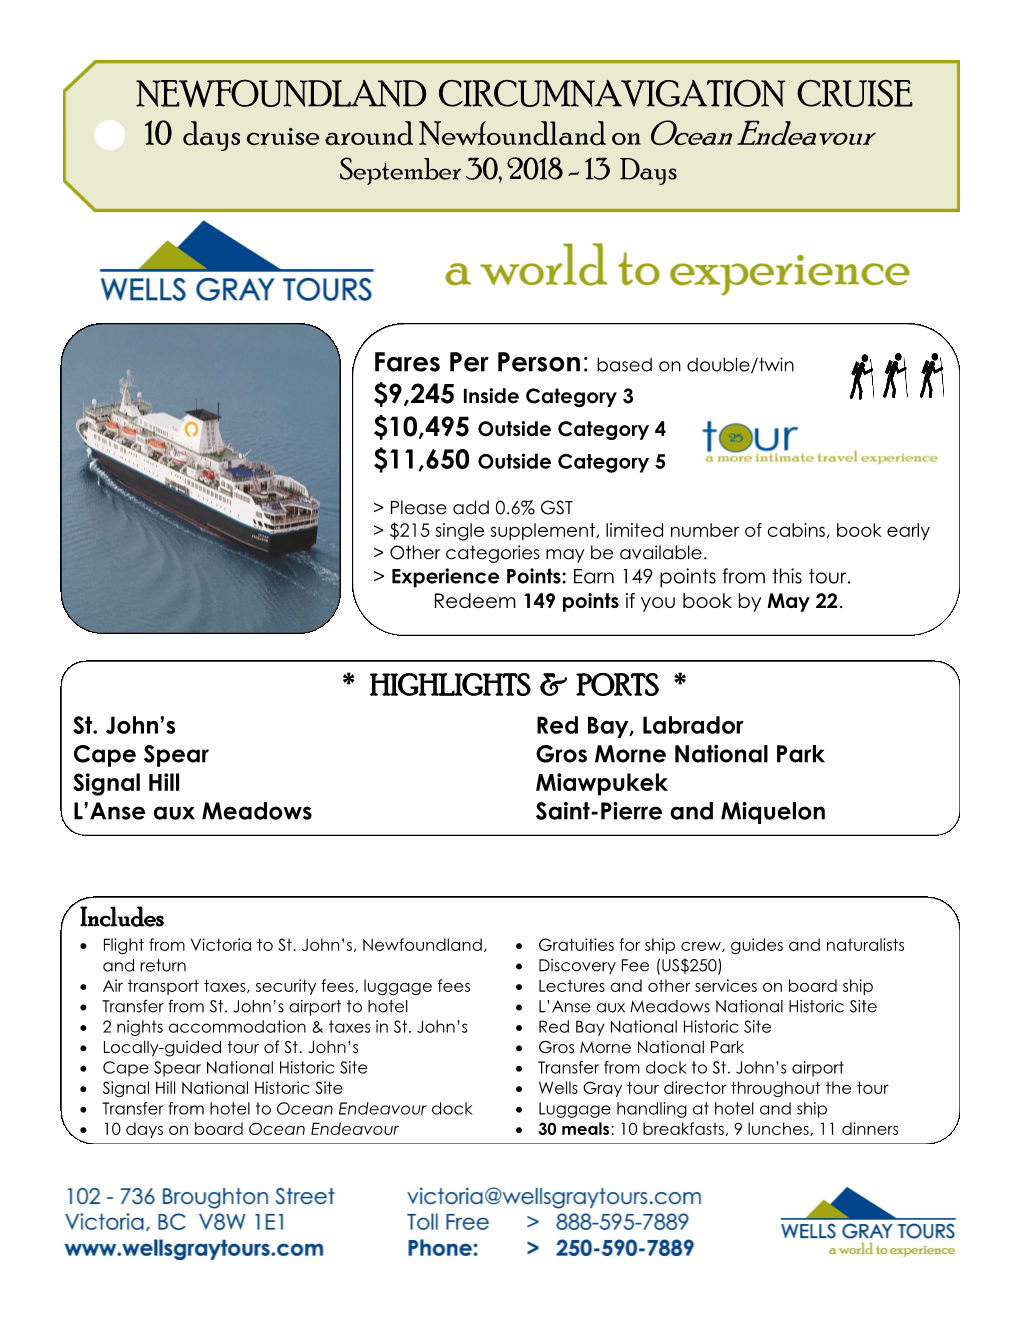 NEWFOUNDLAND CIRCUMNAVIGATION CRUISE 10 Days Cruise Around Newfoundland on Ocean Endeavour September 30, 2018 - 13 Days